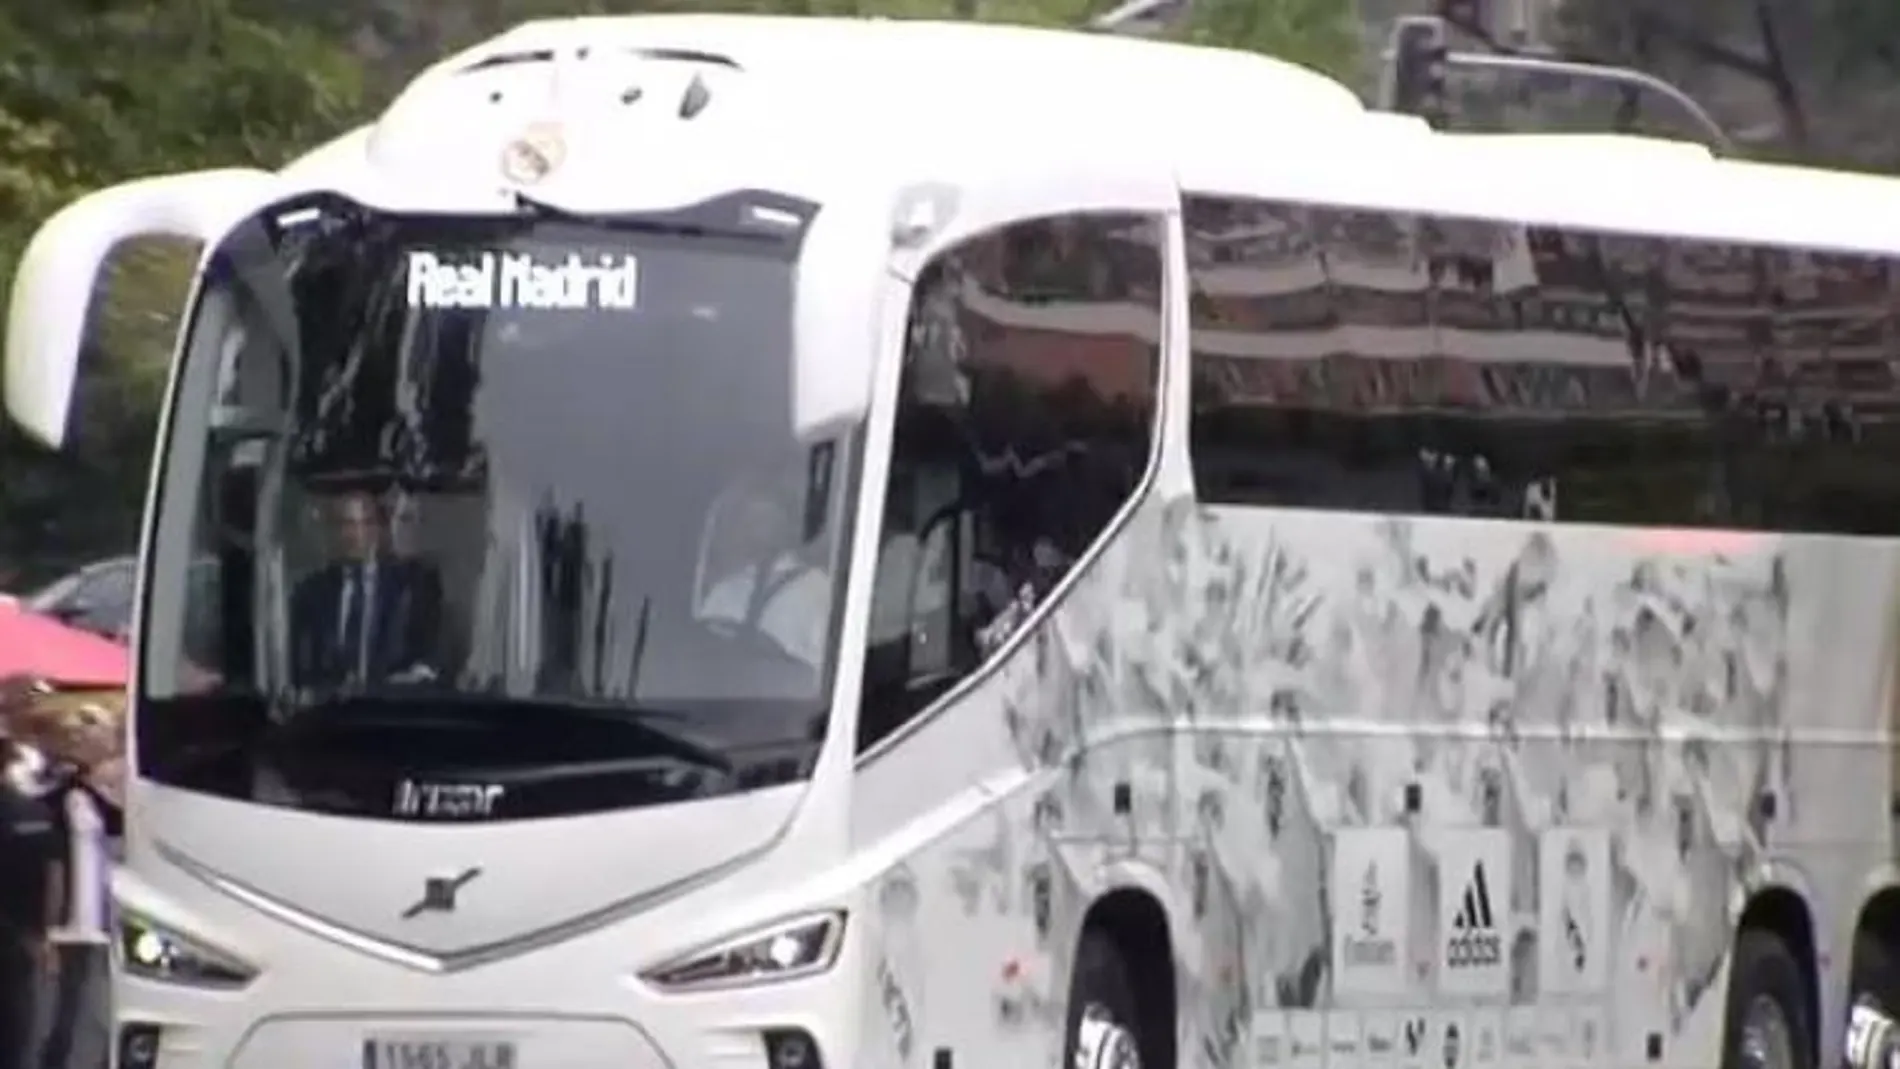 El autobús del Real Madrid